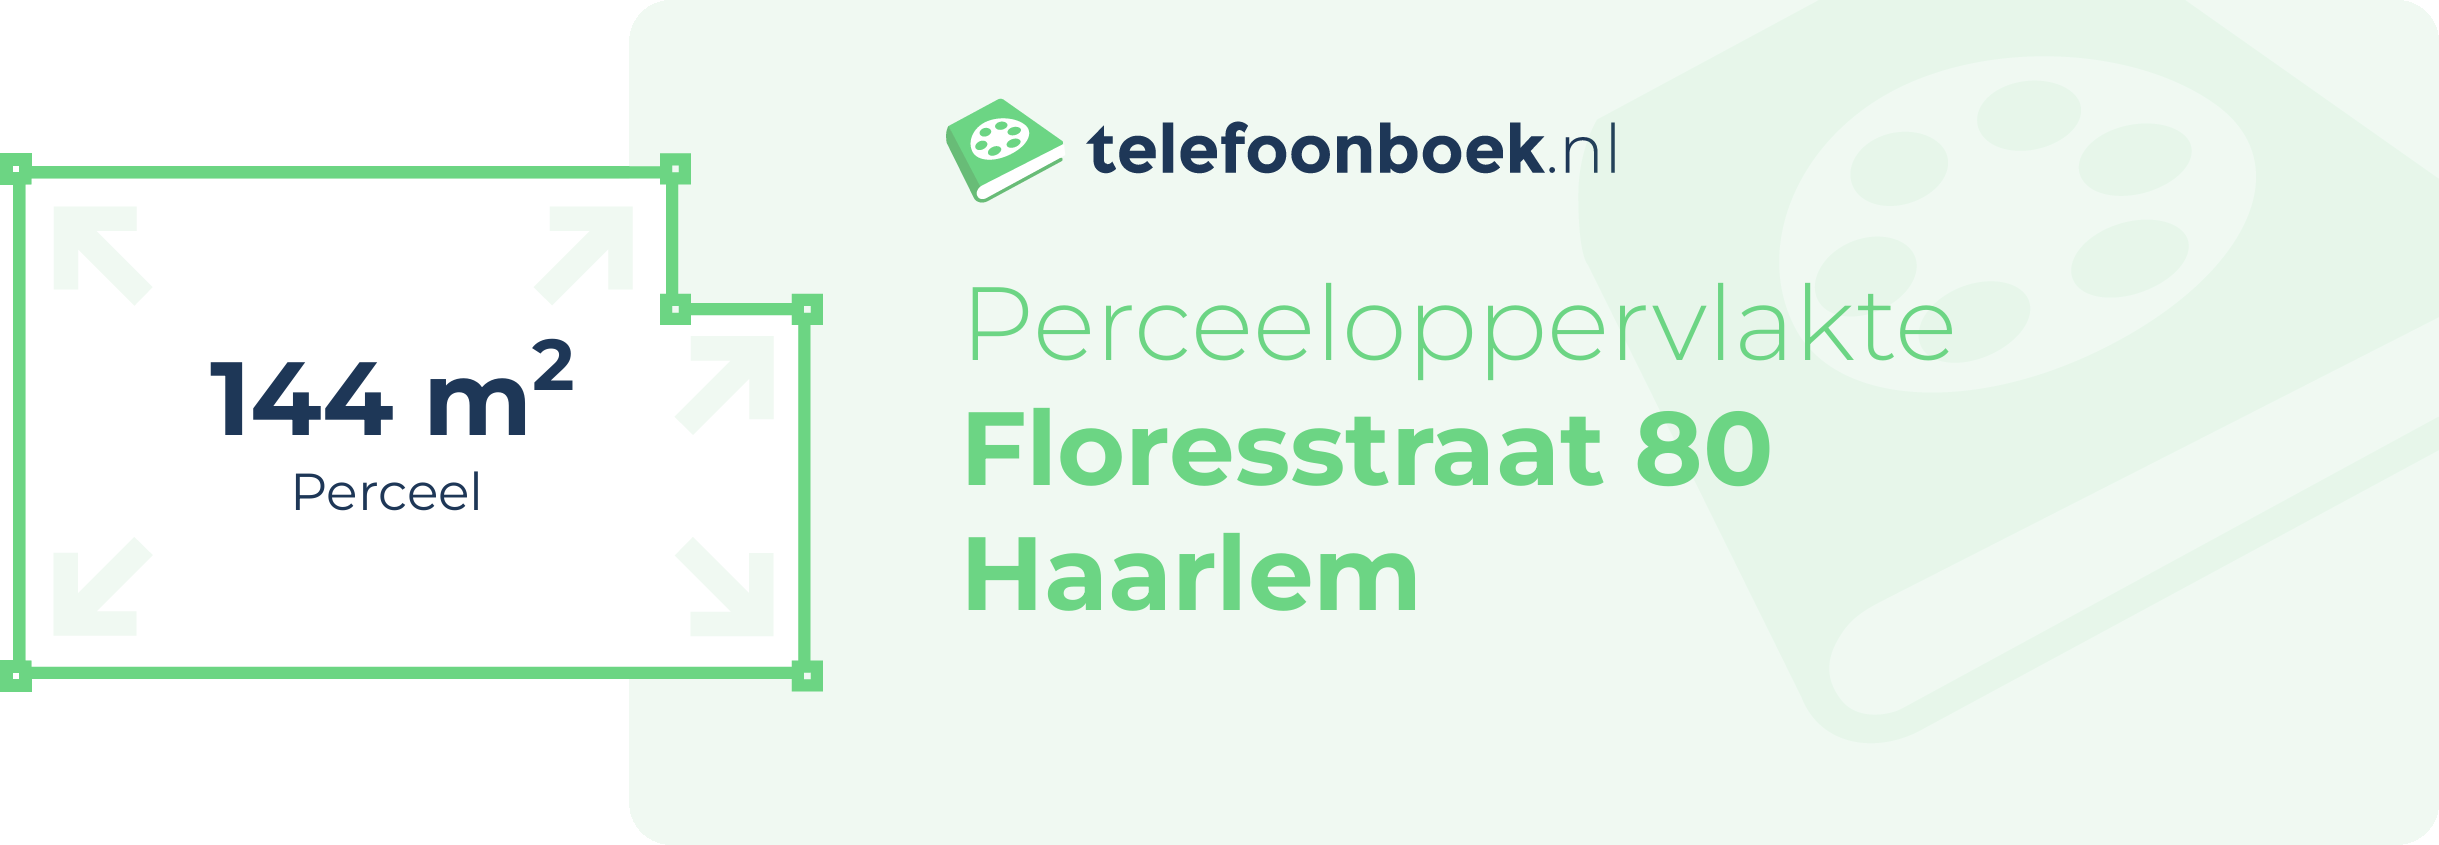 Perceeloppervlakte Floresstraat 80 Haarlem